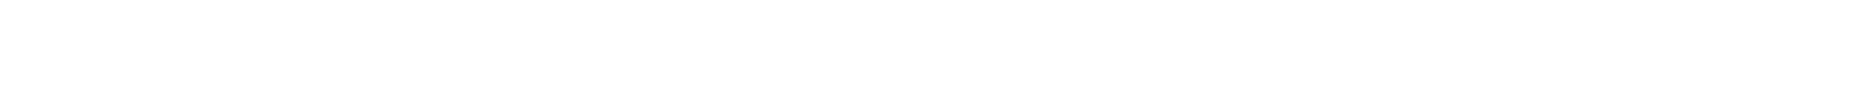 Polviyhdistys Logo